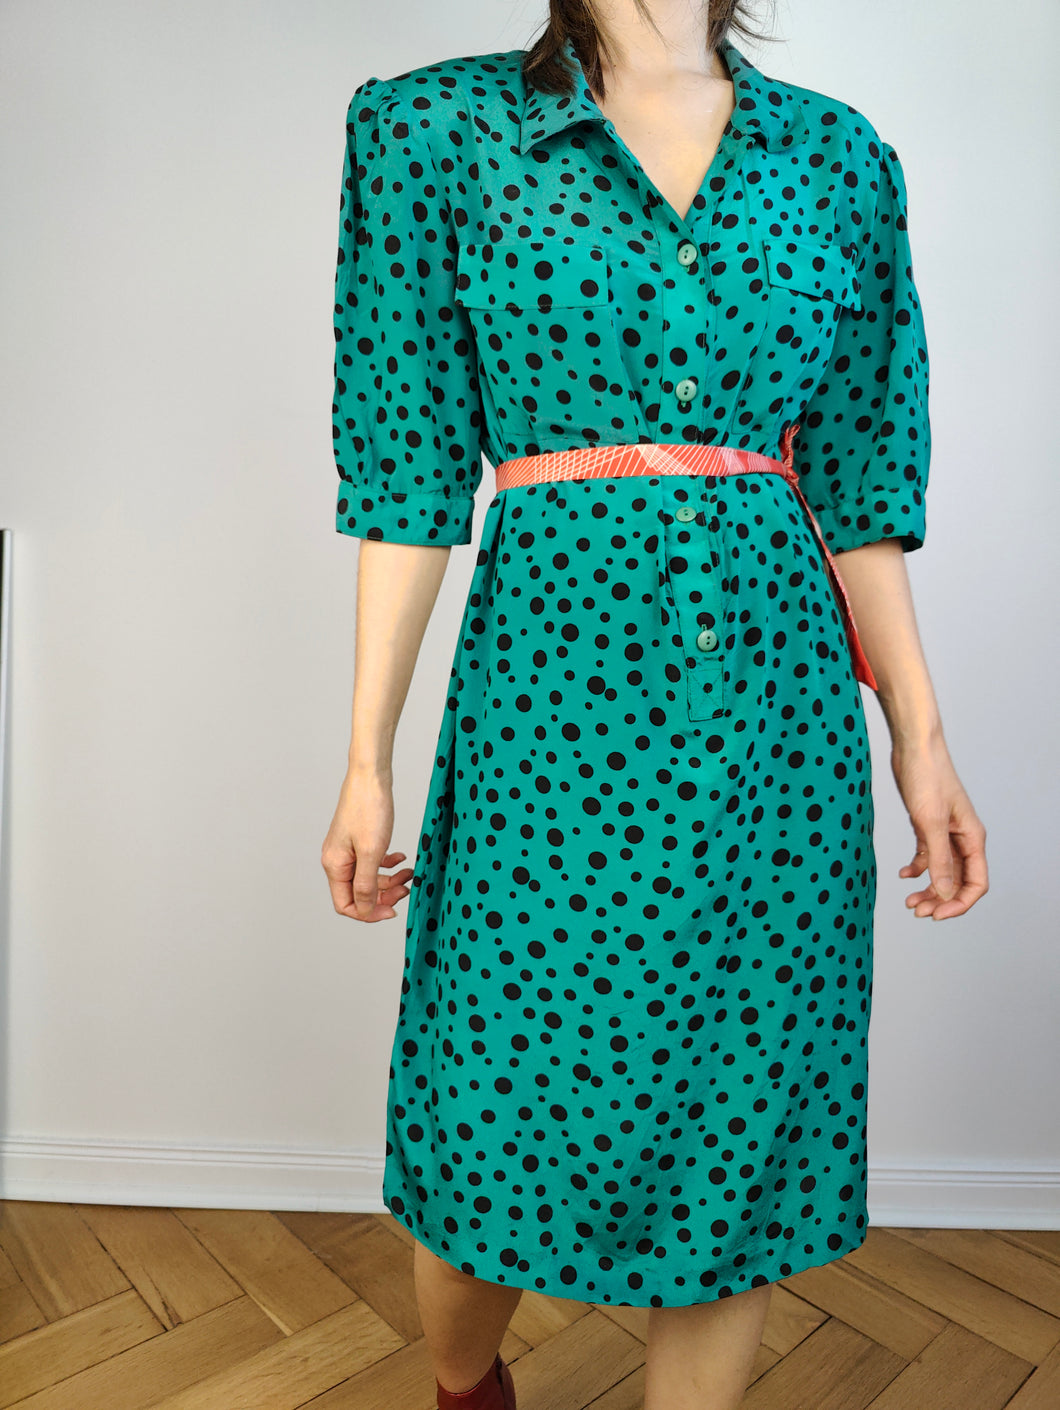 The Silk Turquoise Polka Dot Pattern Dress | Vintage Lola Kay made in Italy green black dots print midi shirt dress IT46 M